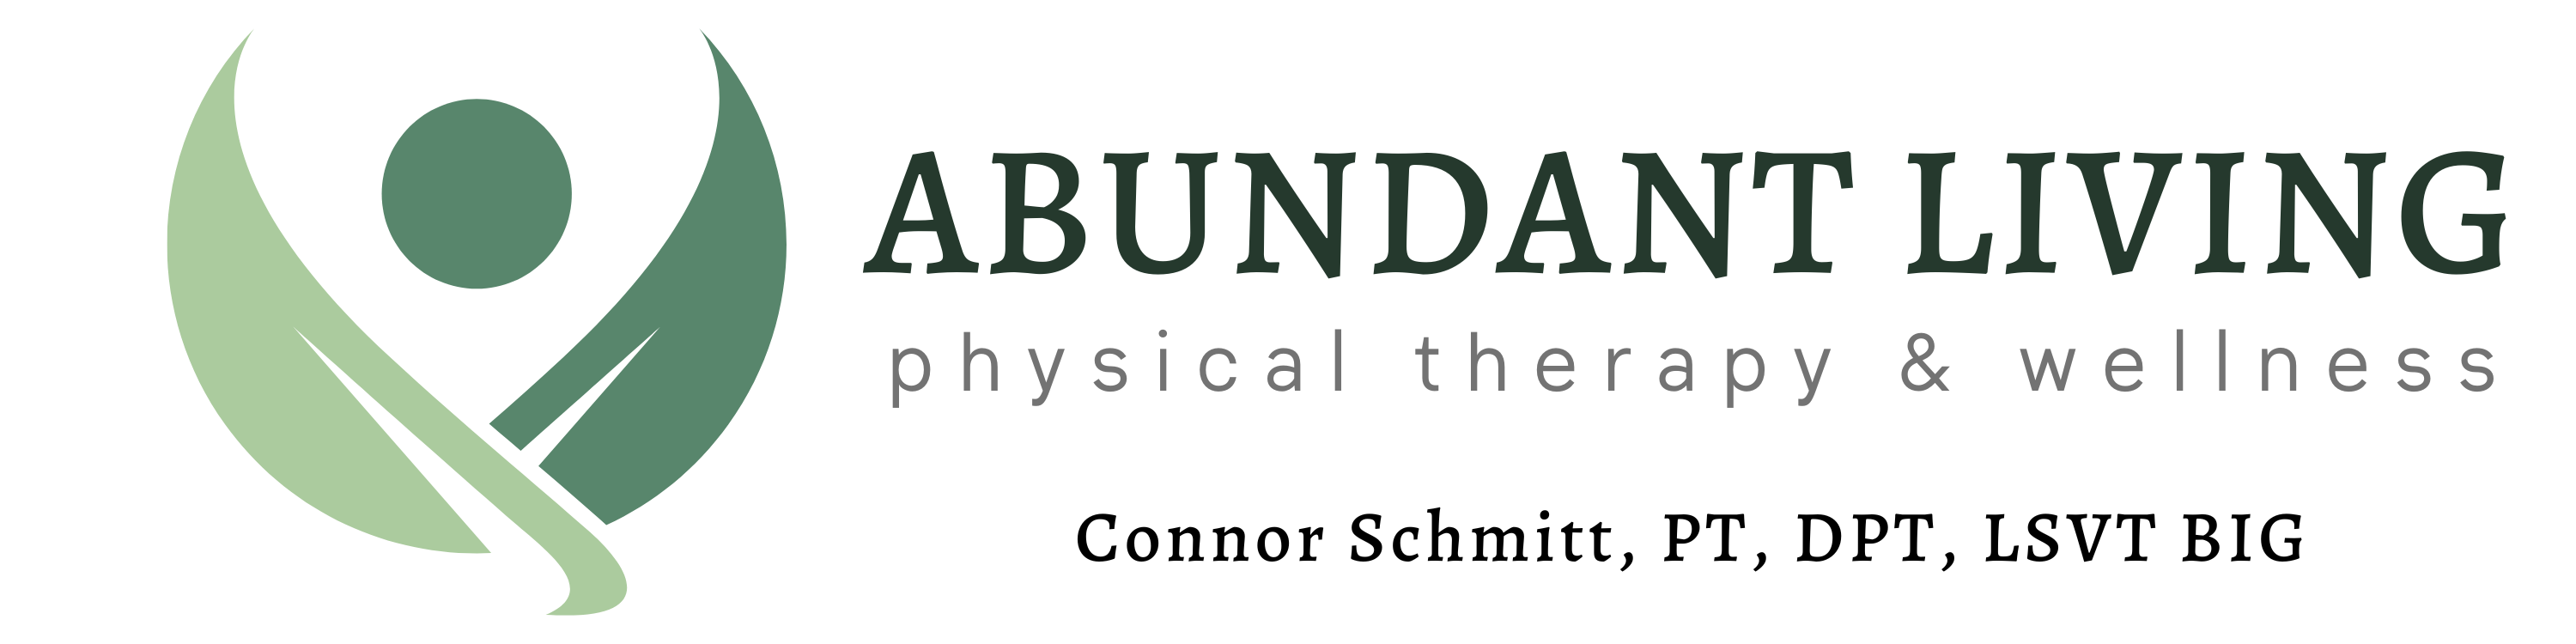 Abundant Living Physical Therapy & Wellness